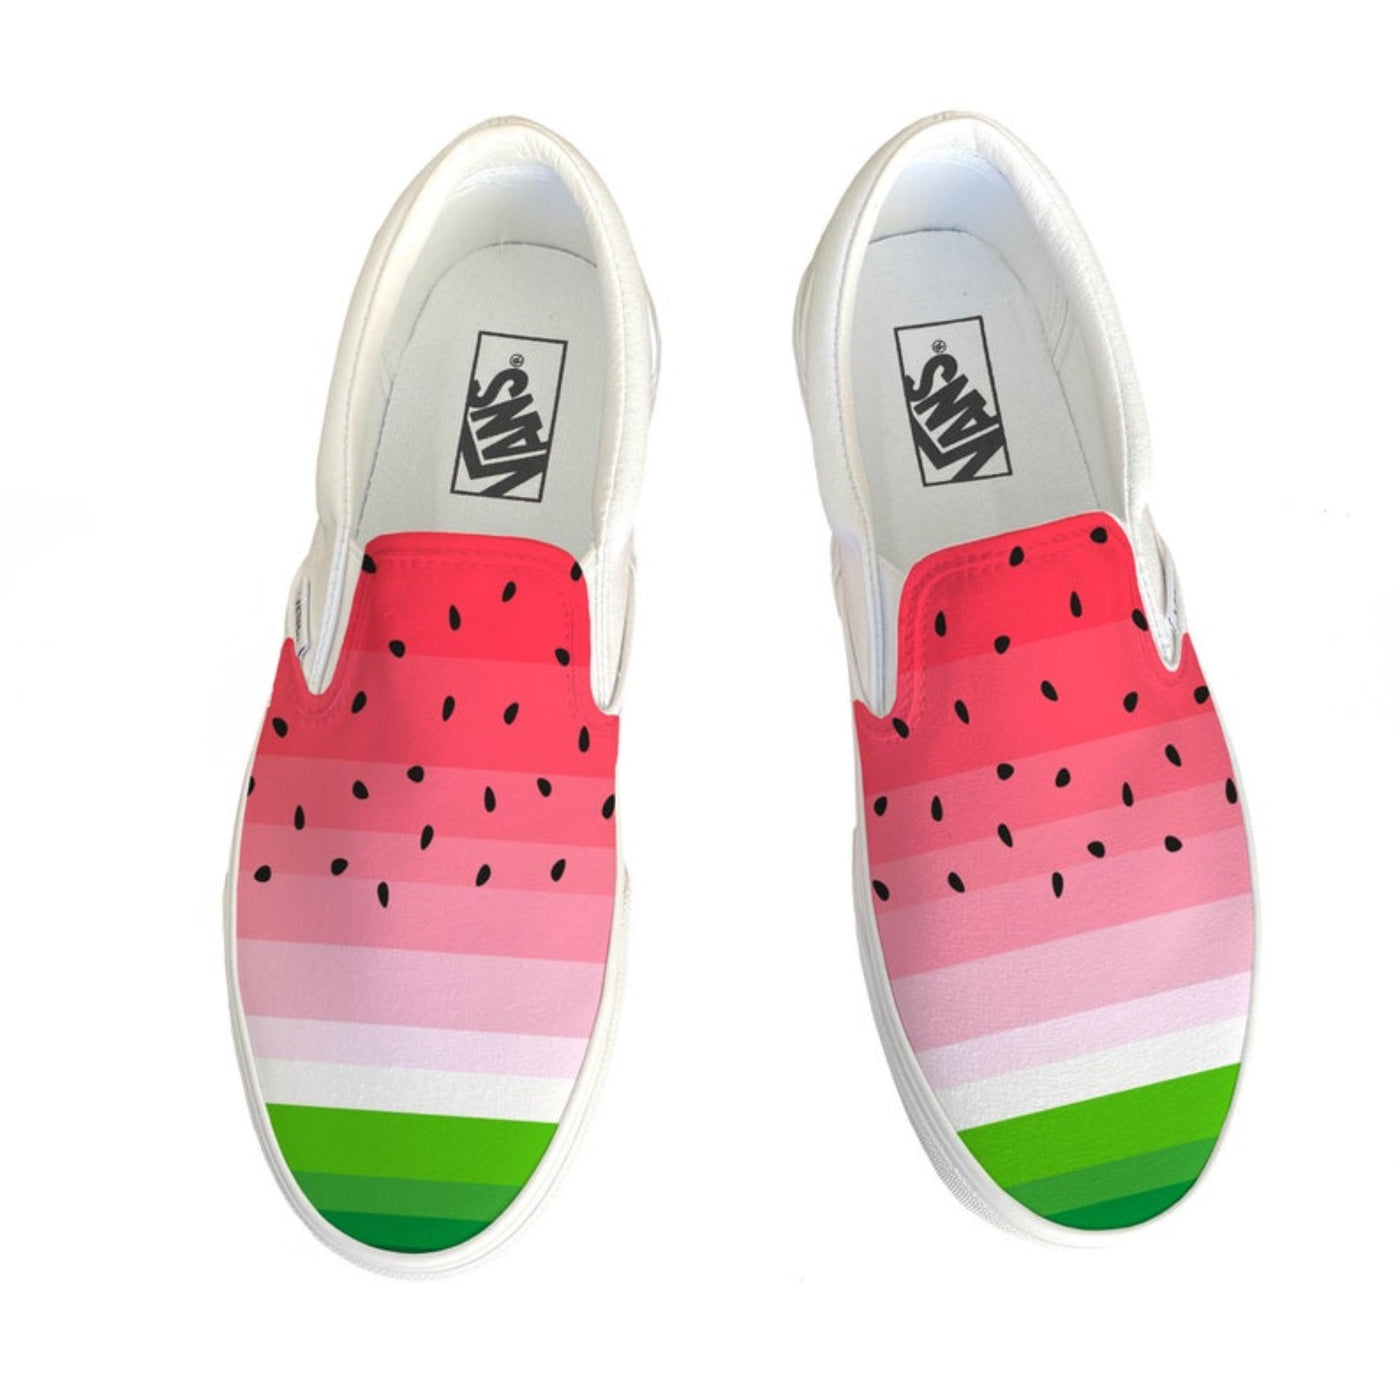 Watermelon White Vans Slip On Shoes